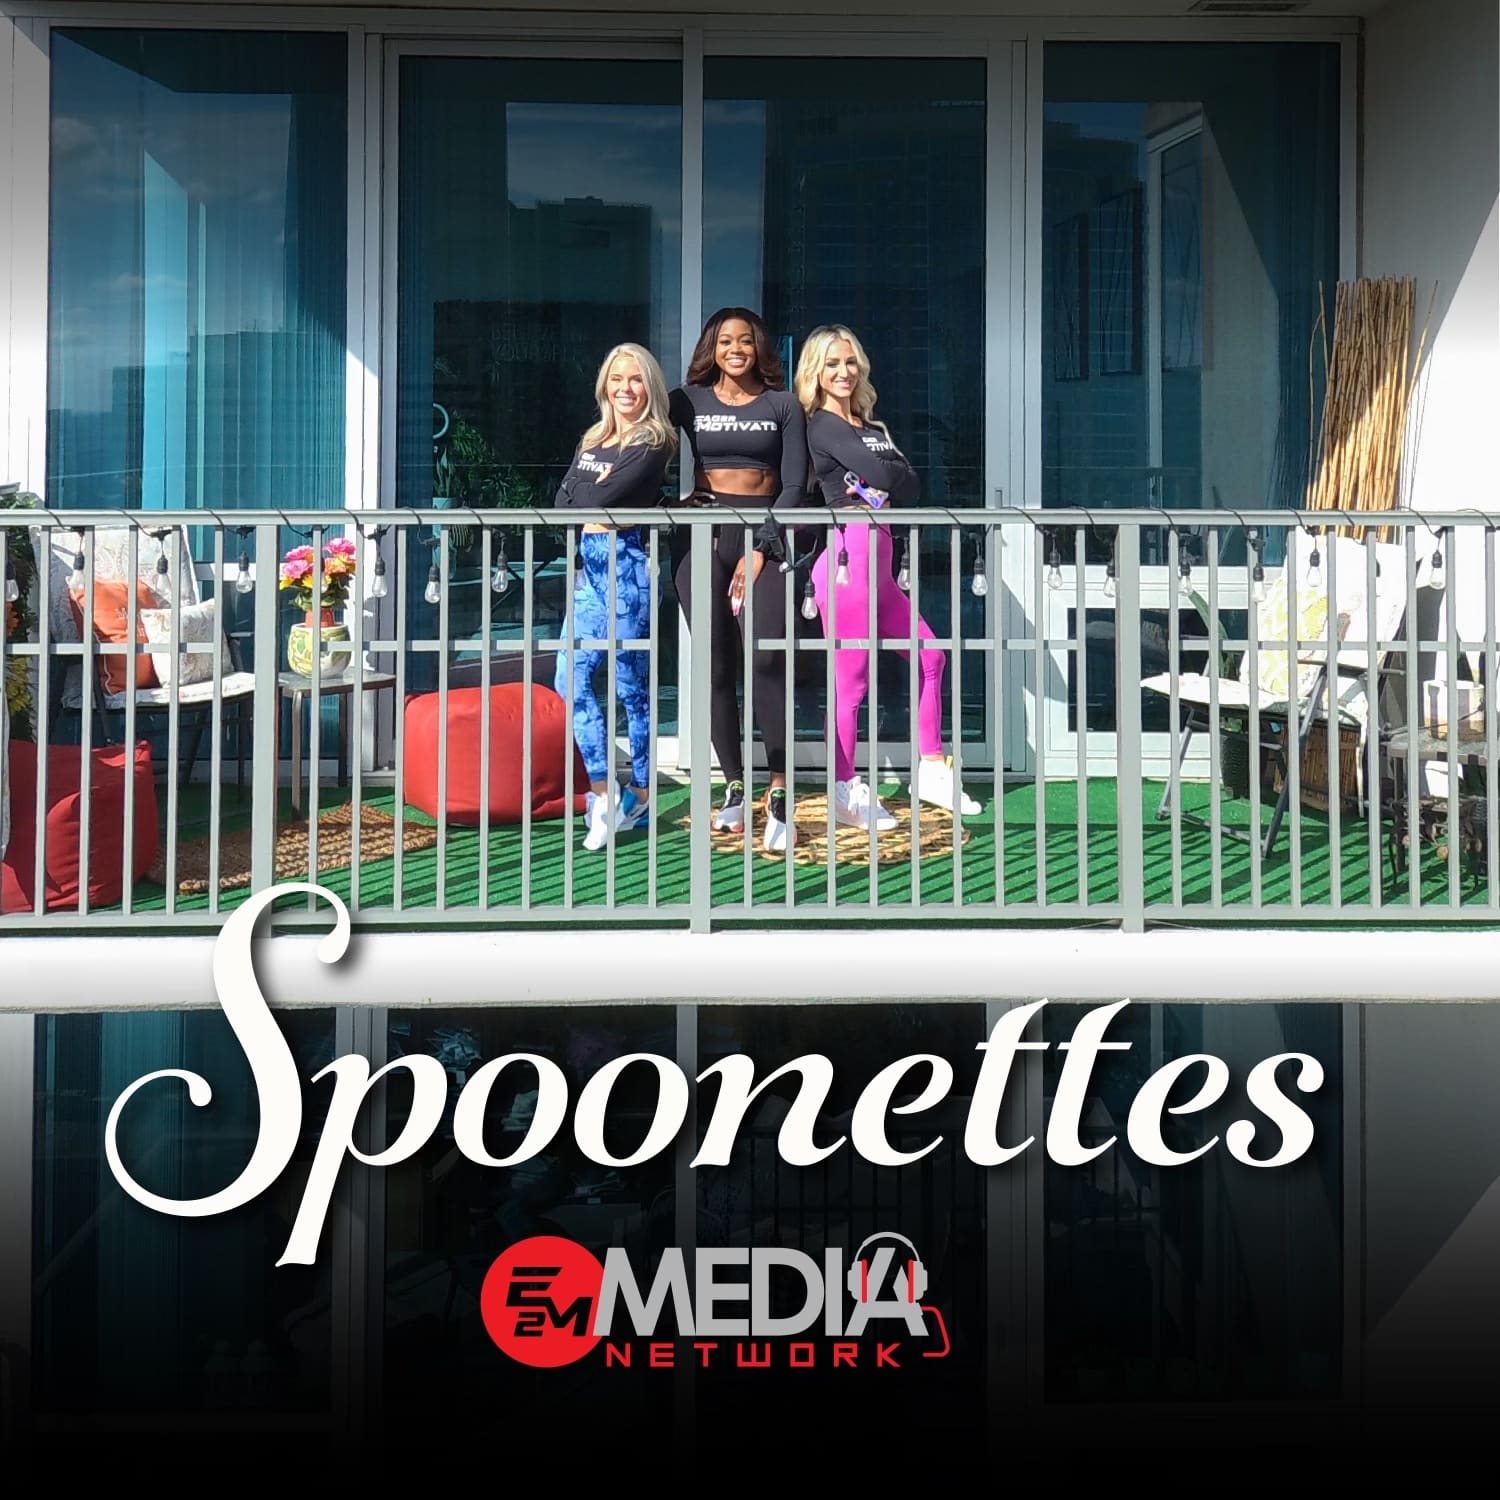 Spoonettes – Episode 5